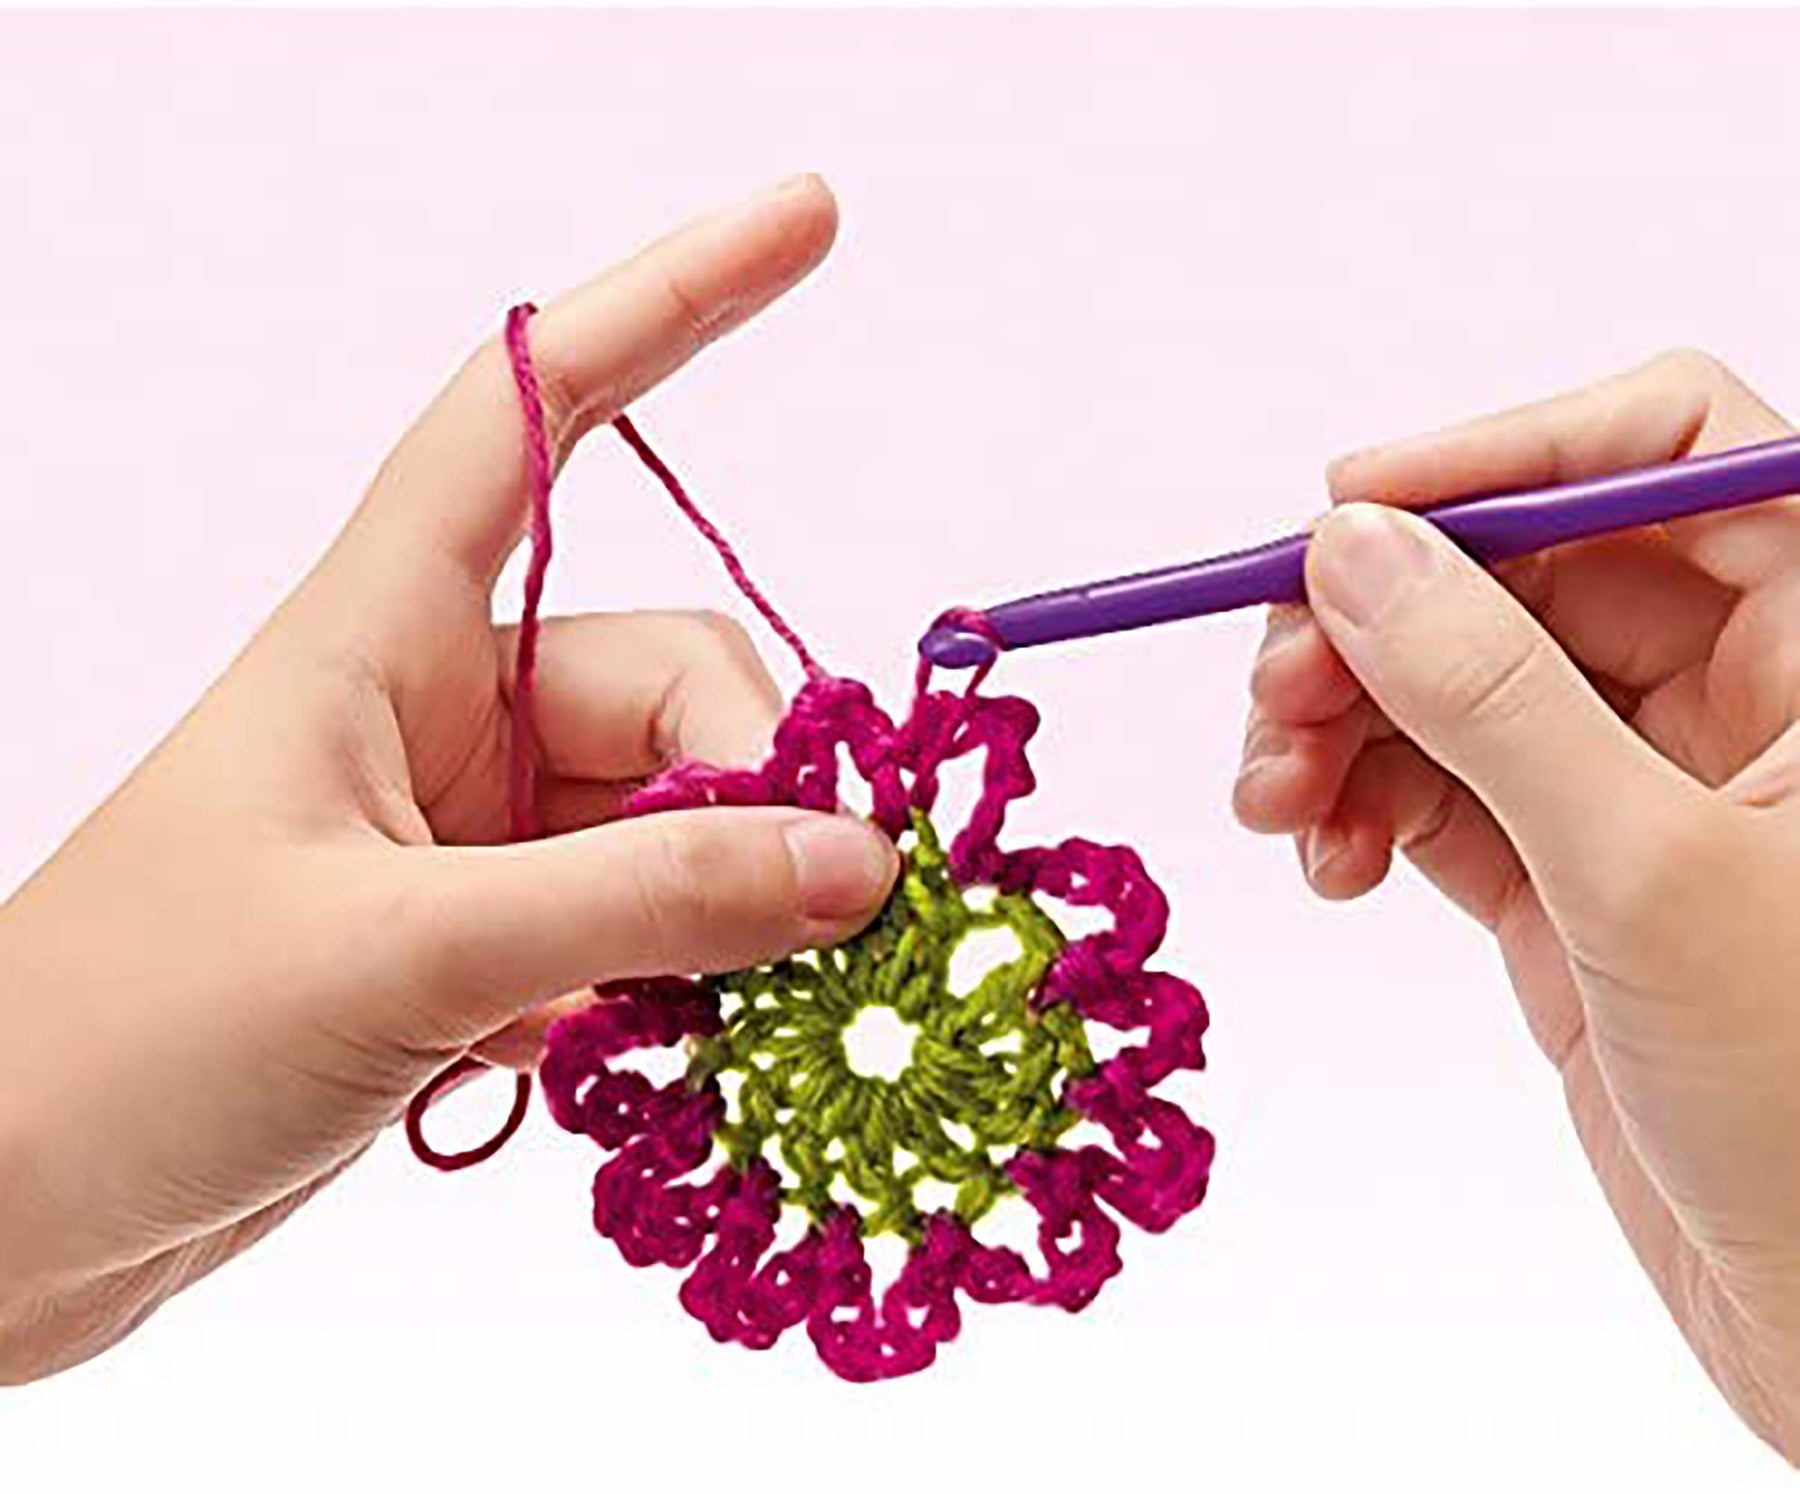 4M 3625 Easy-To-Do Crochet Kit - DIY Arts & Crafts Yarn Gift for Kids &  Teens, Boys & Girls